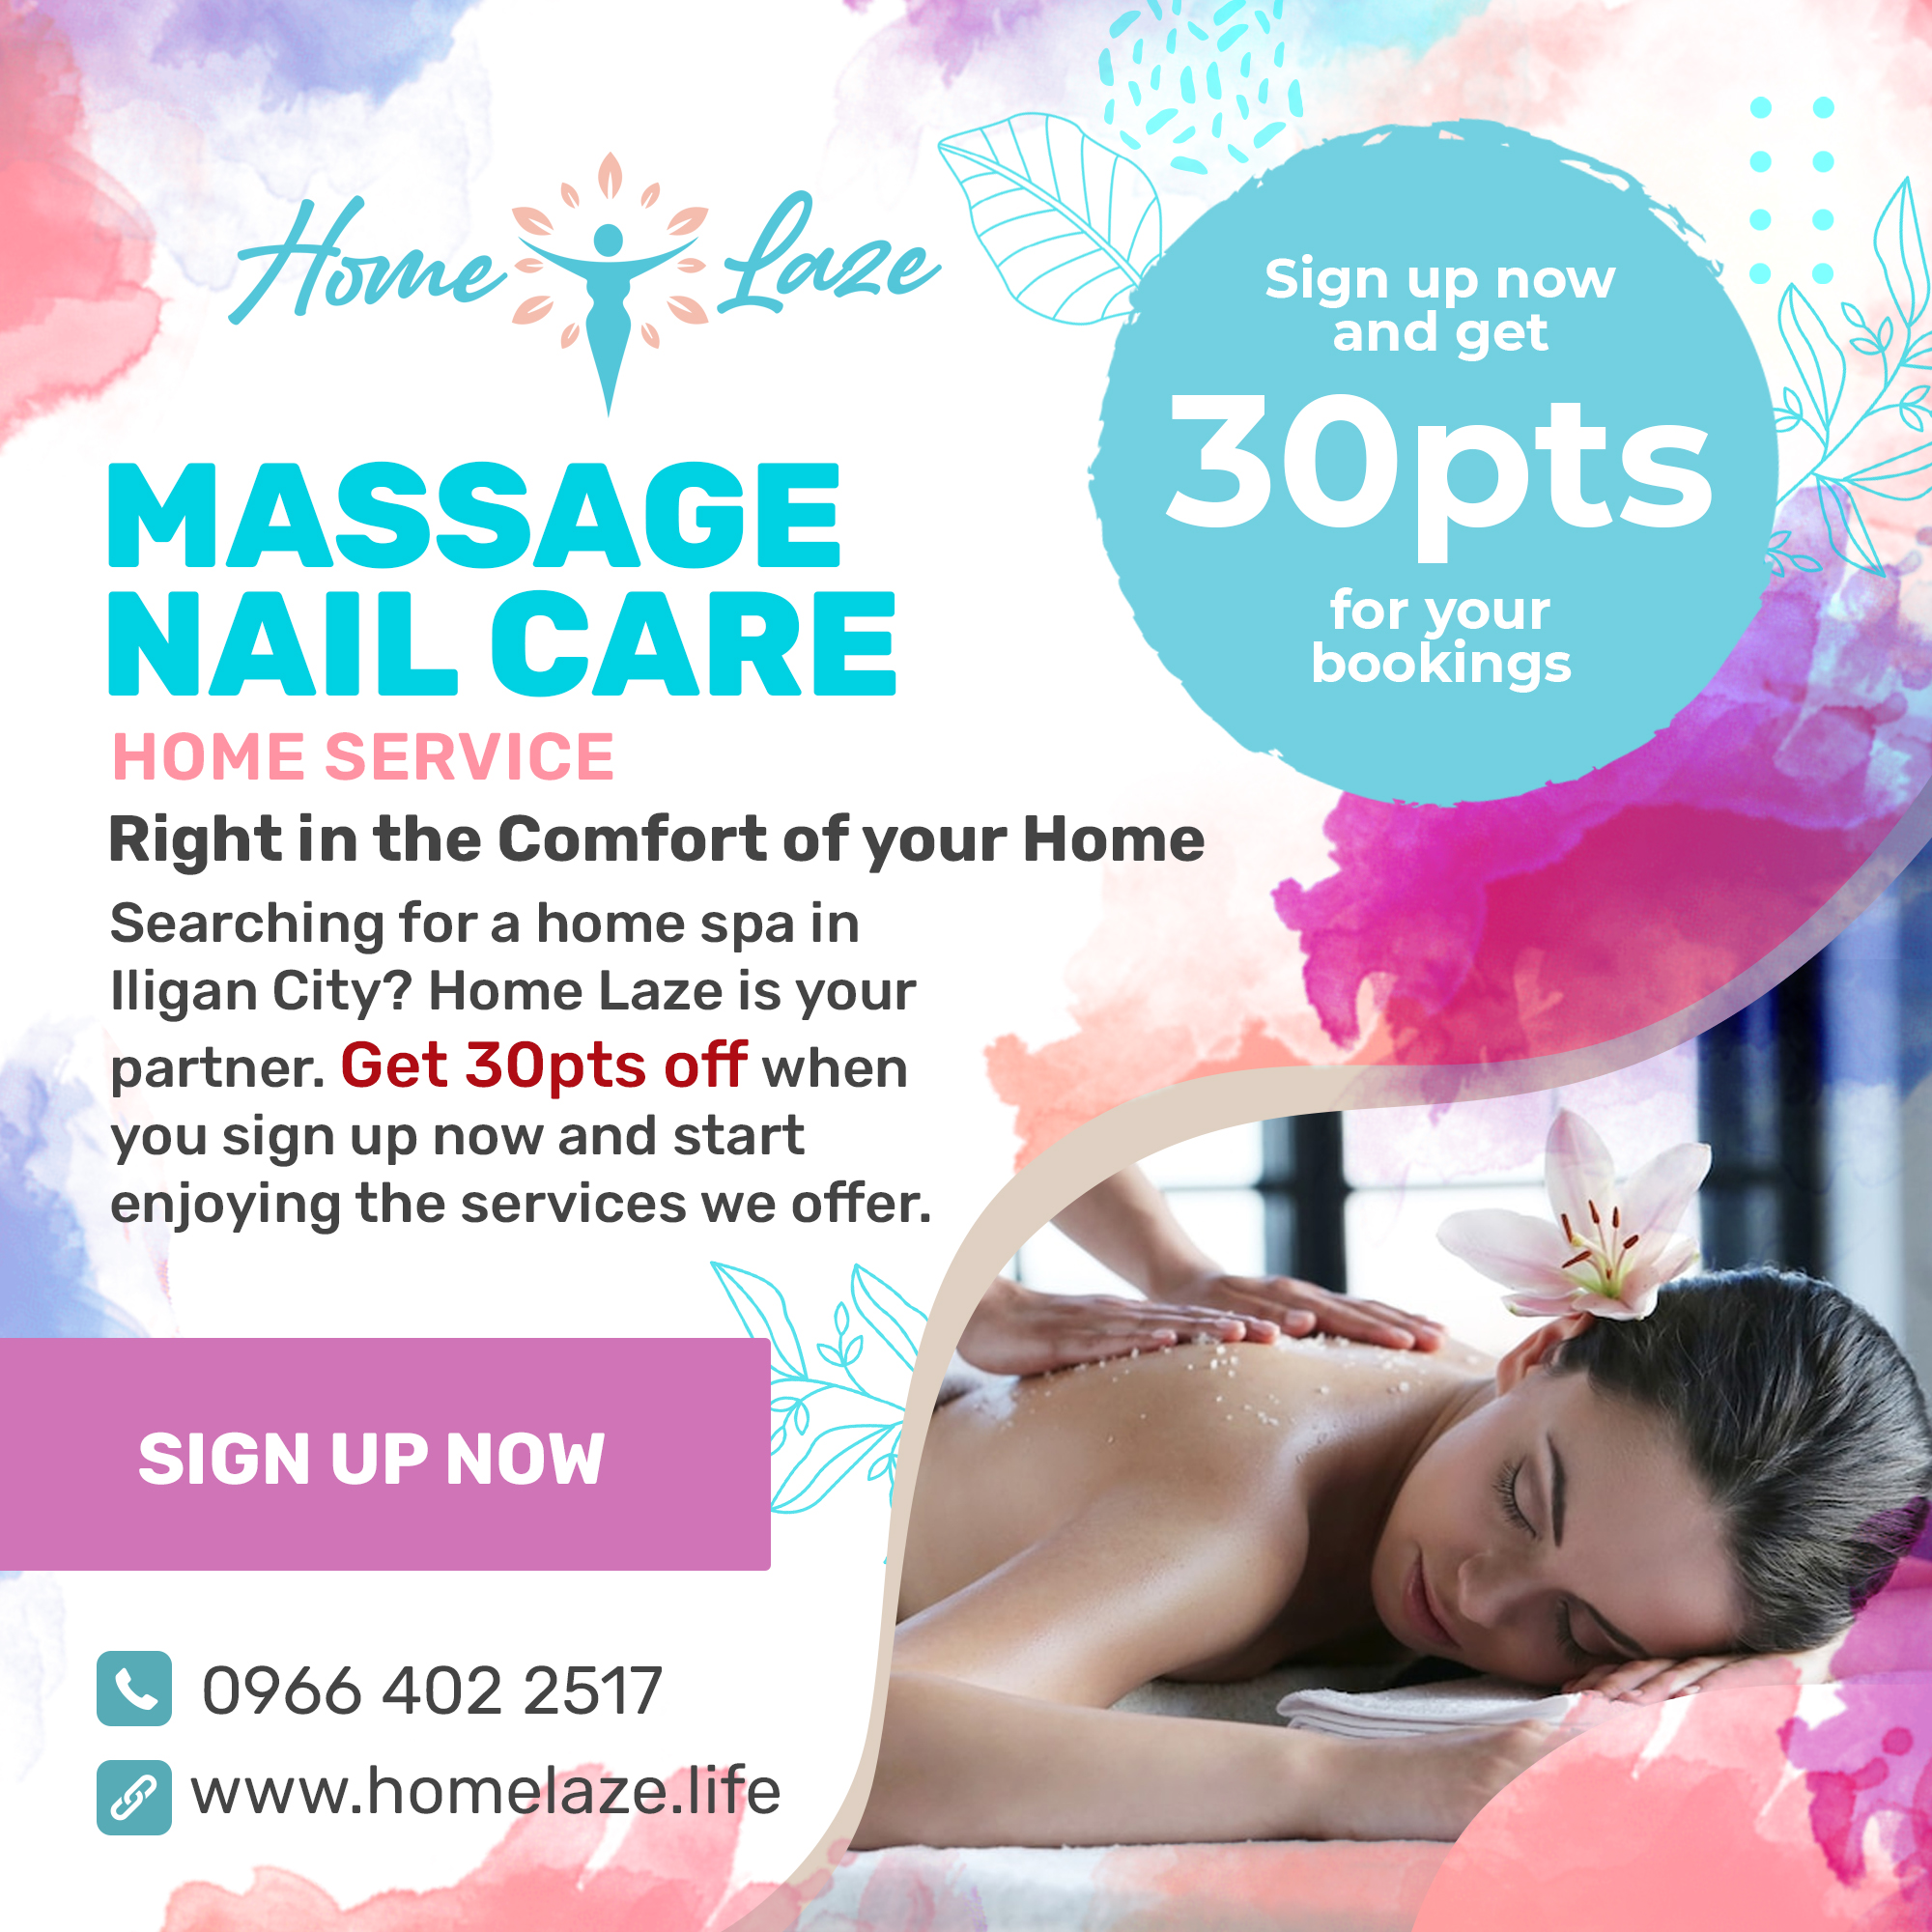 Home Laze Massage